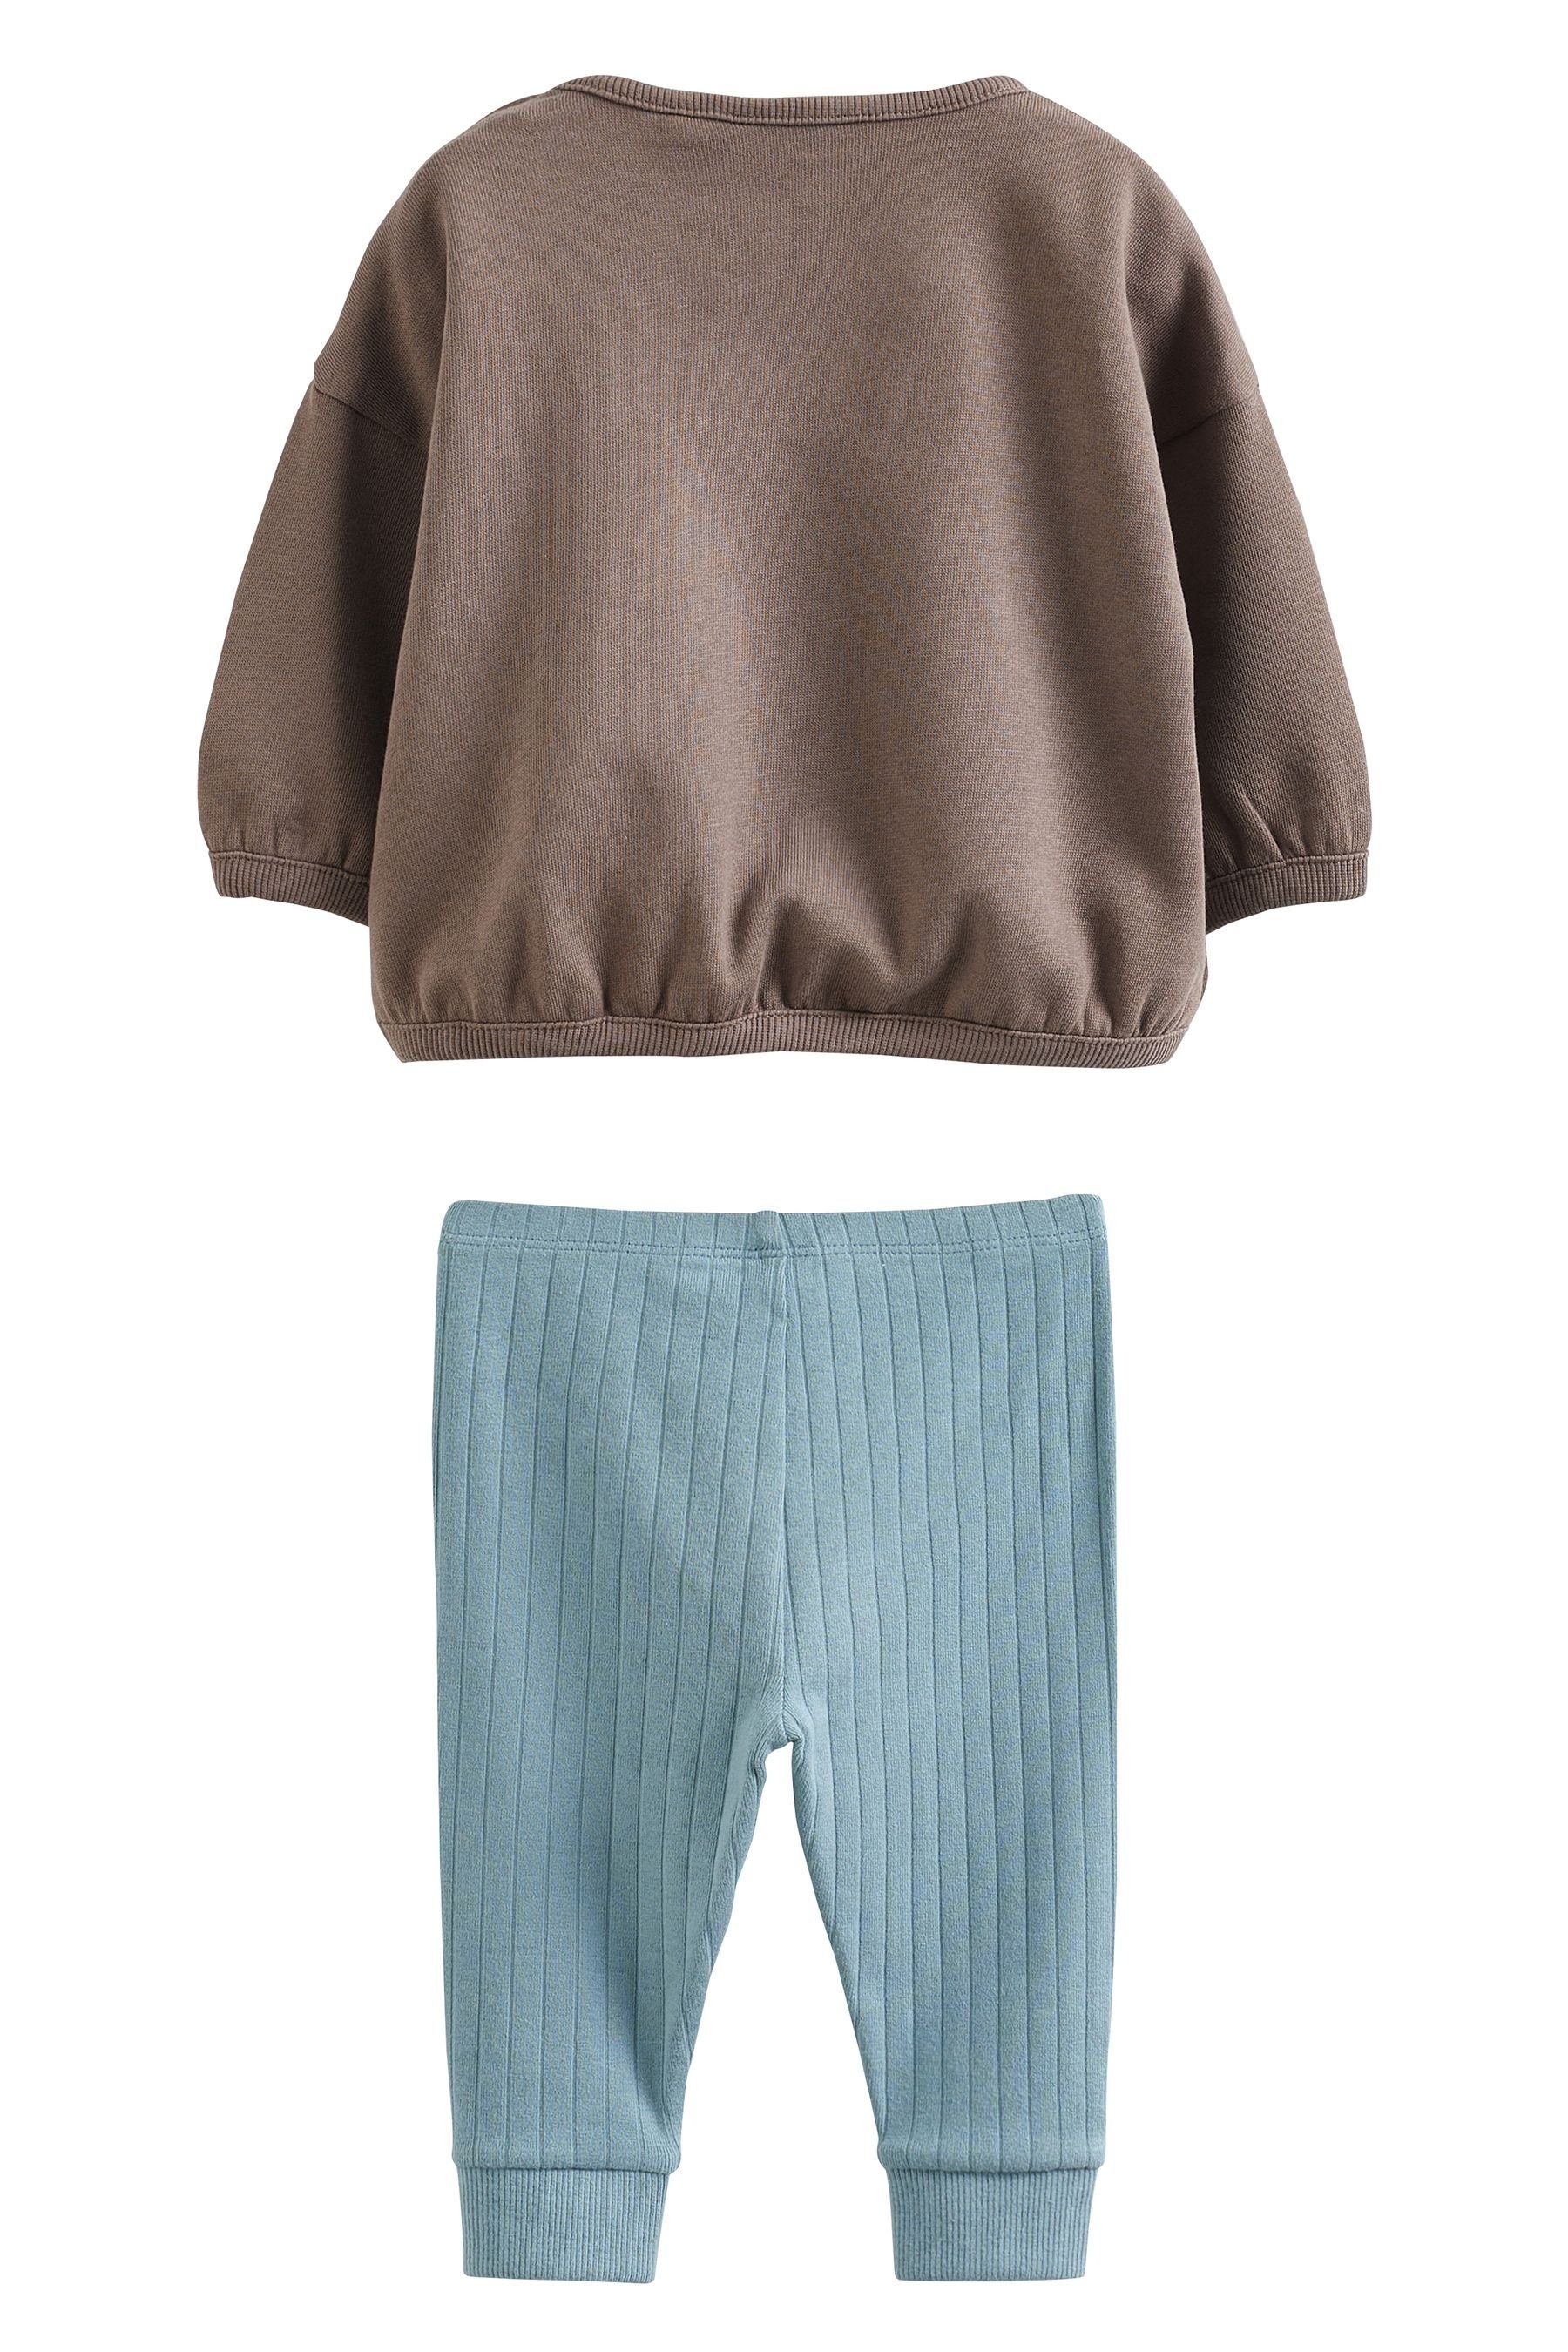 Brown Chocolate & Dinosaur Leggings Leggings (2-tlg) Baby-Set Next und Shirt mit Sweatshirt 2-teiliges